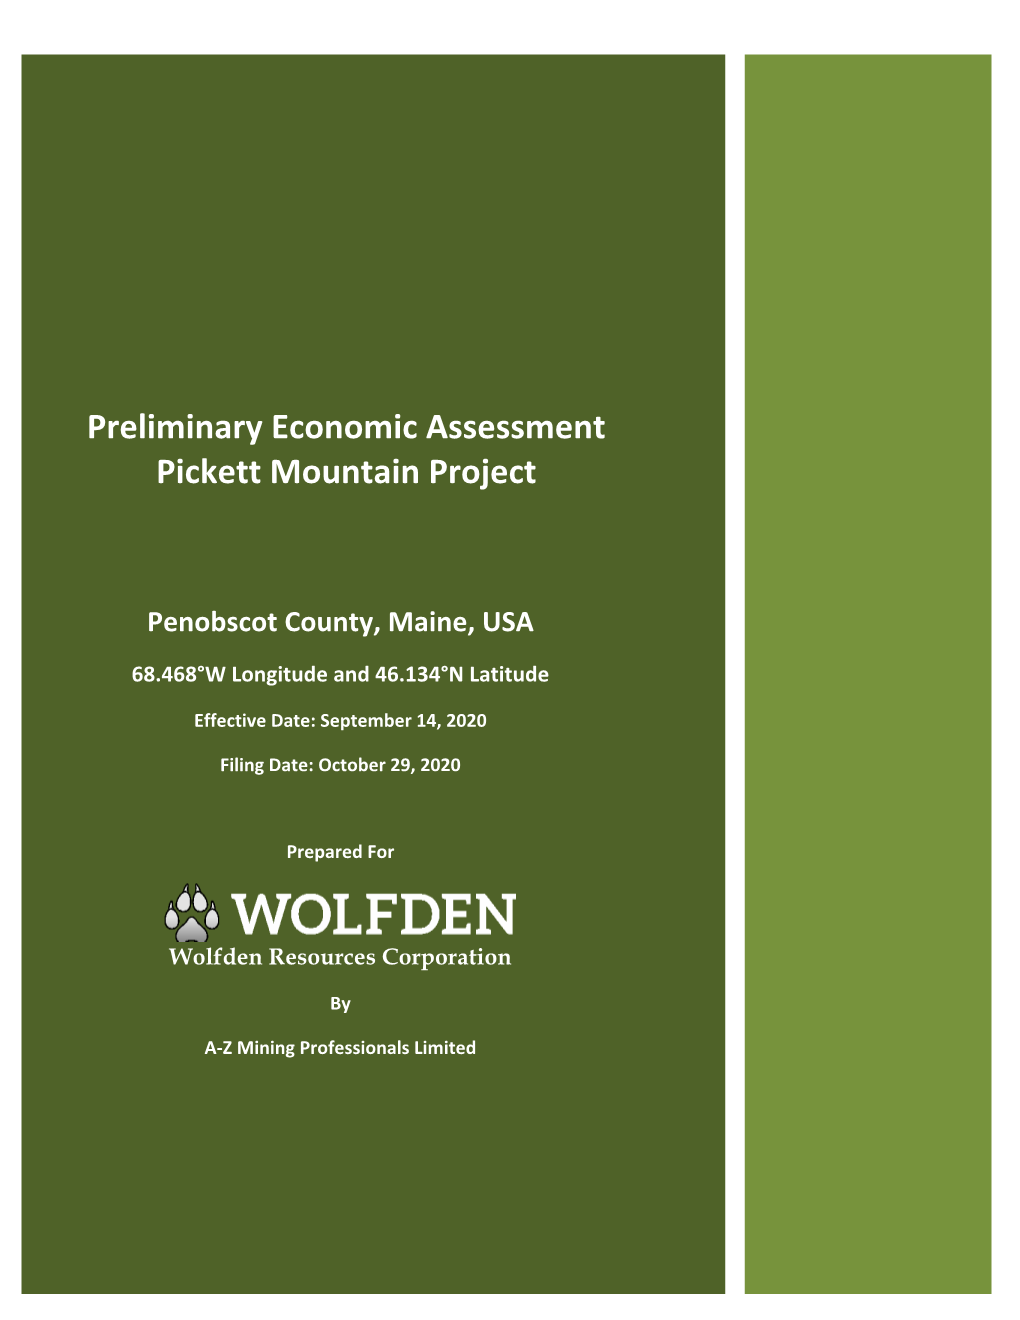 Preliminary Economic Assessment Pickett Mountain Project